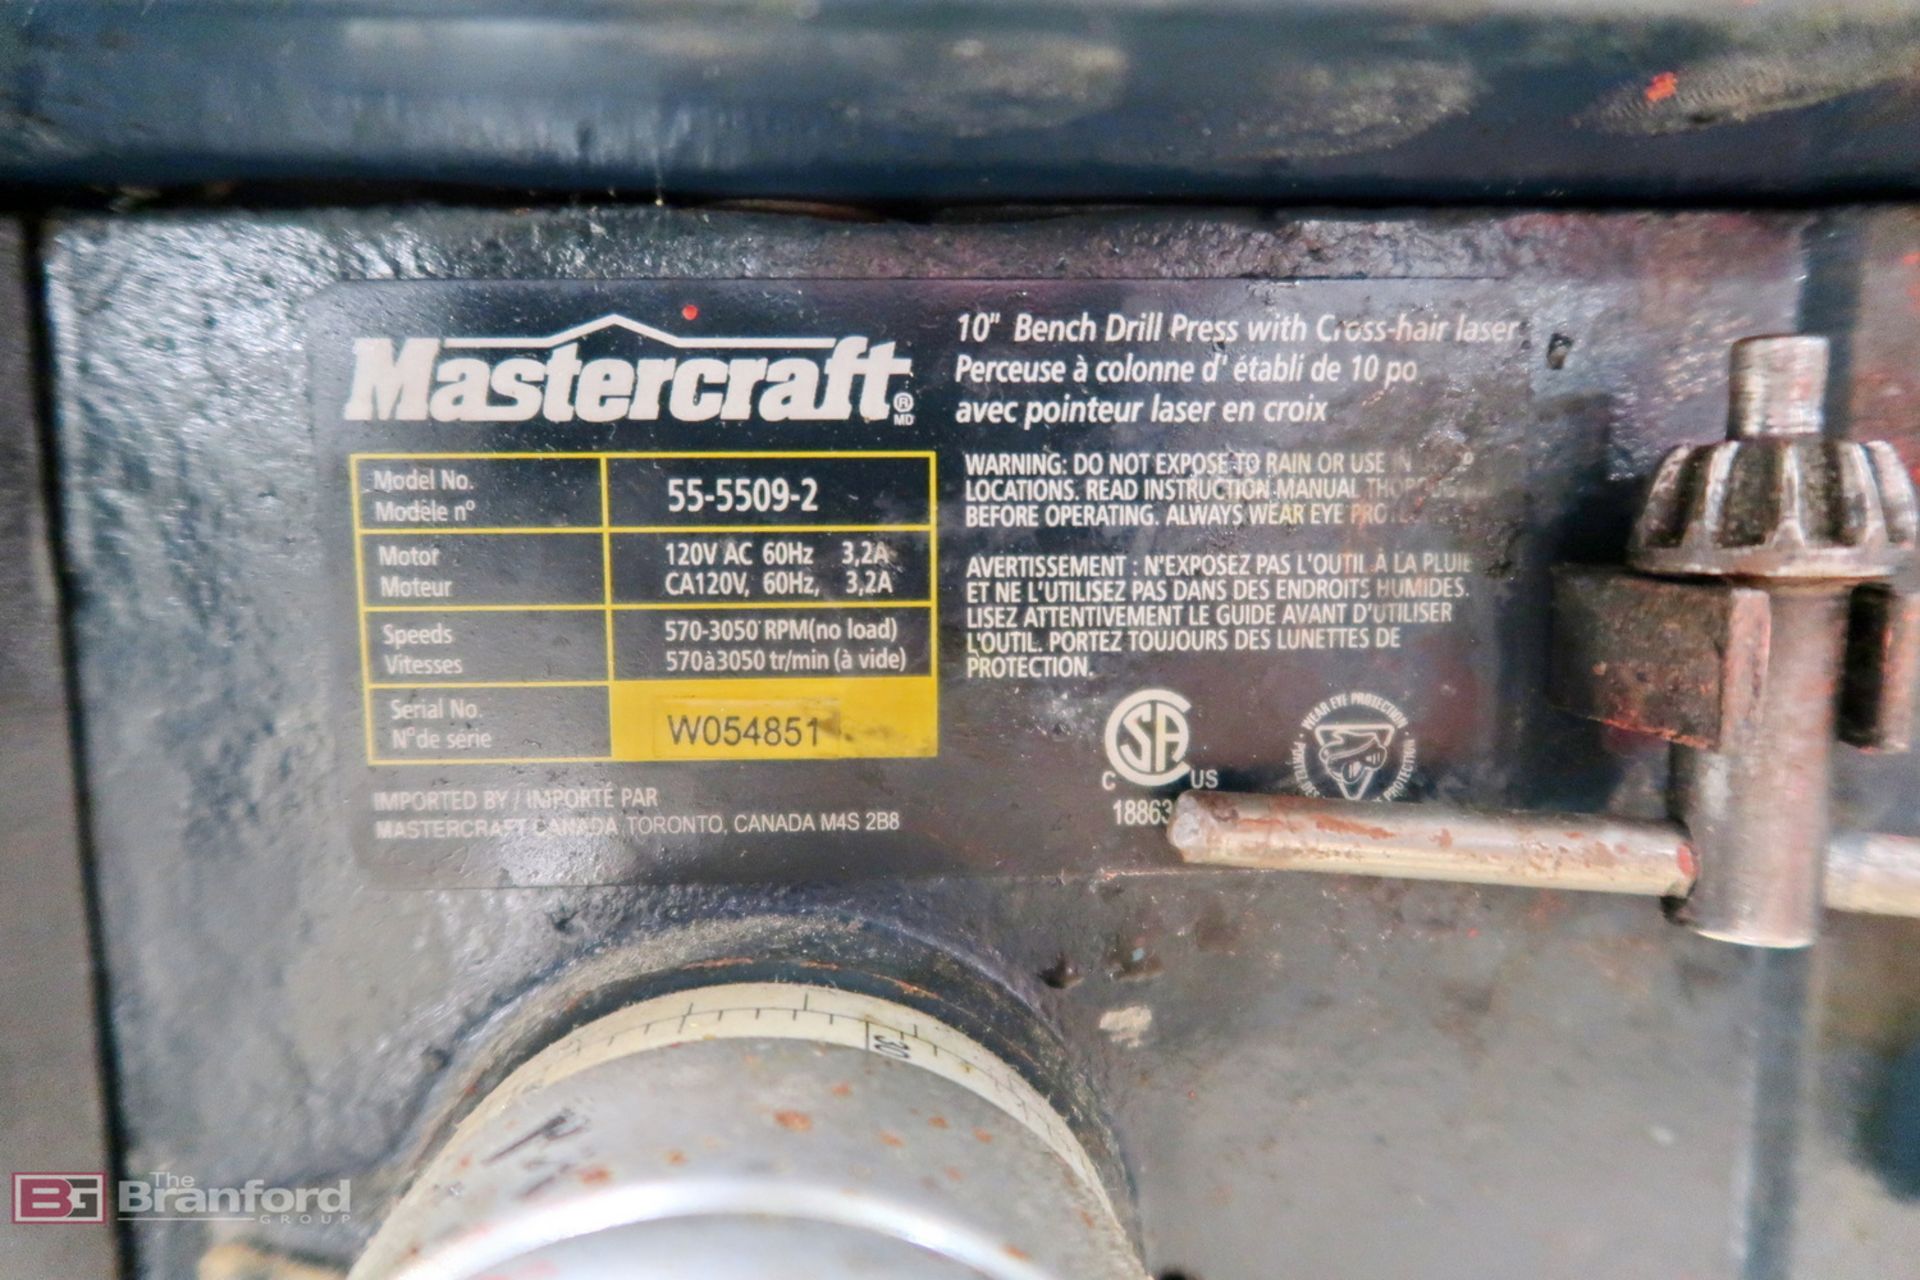 Mastercraft 10" bench drill press model 55-5509-2 - Image 2 of 2